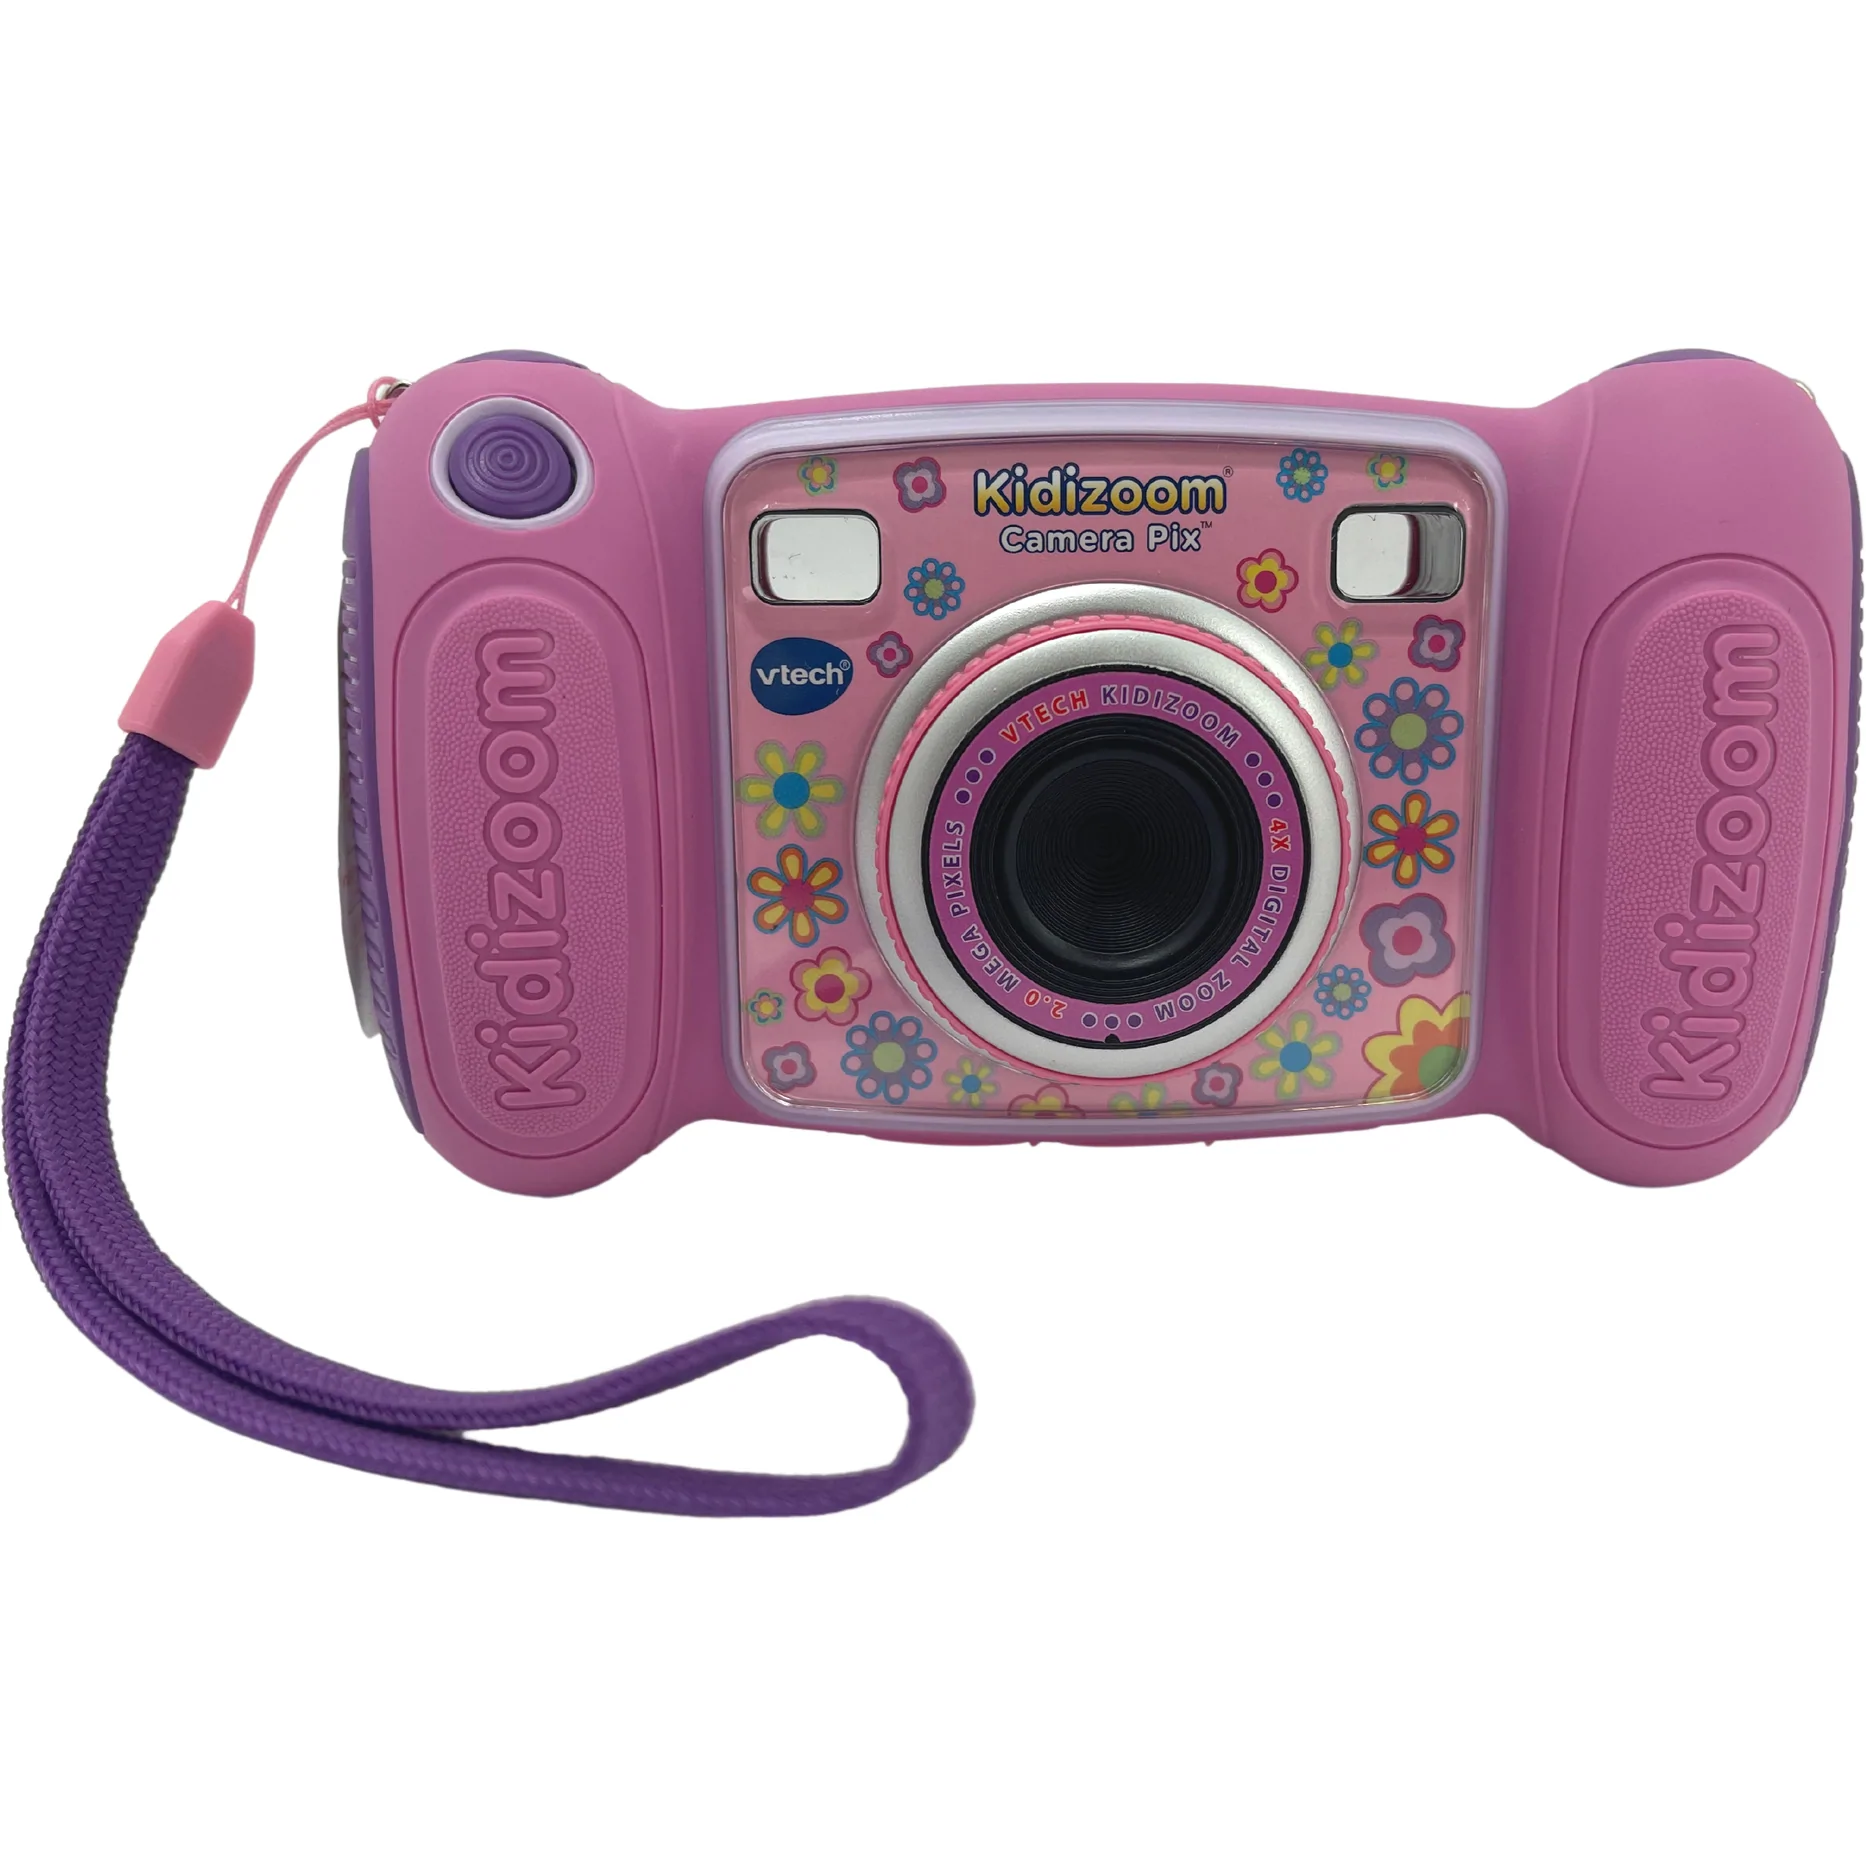 Vtech Kidi Zoom Camera Pix / Pink & Purple / Kid's Interactive Camera with Wrist Strap **DEALS**